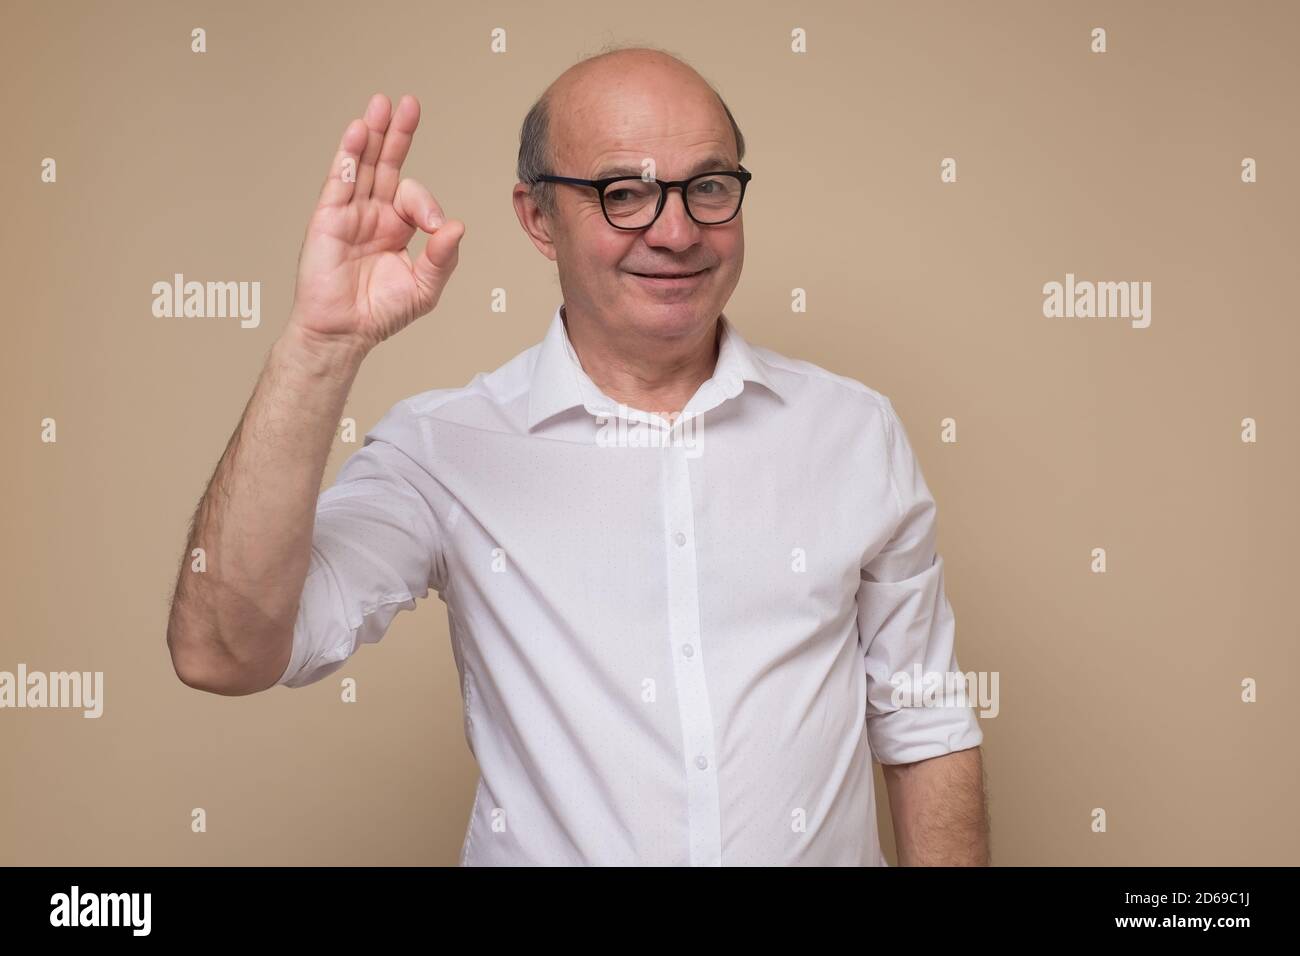 Happy mature bald man in glasses doing ok gesture. Stock Photo